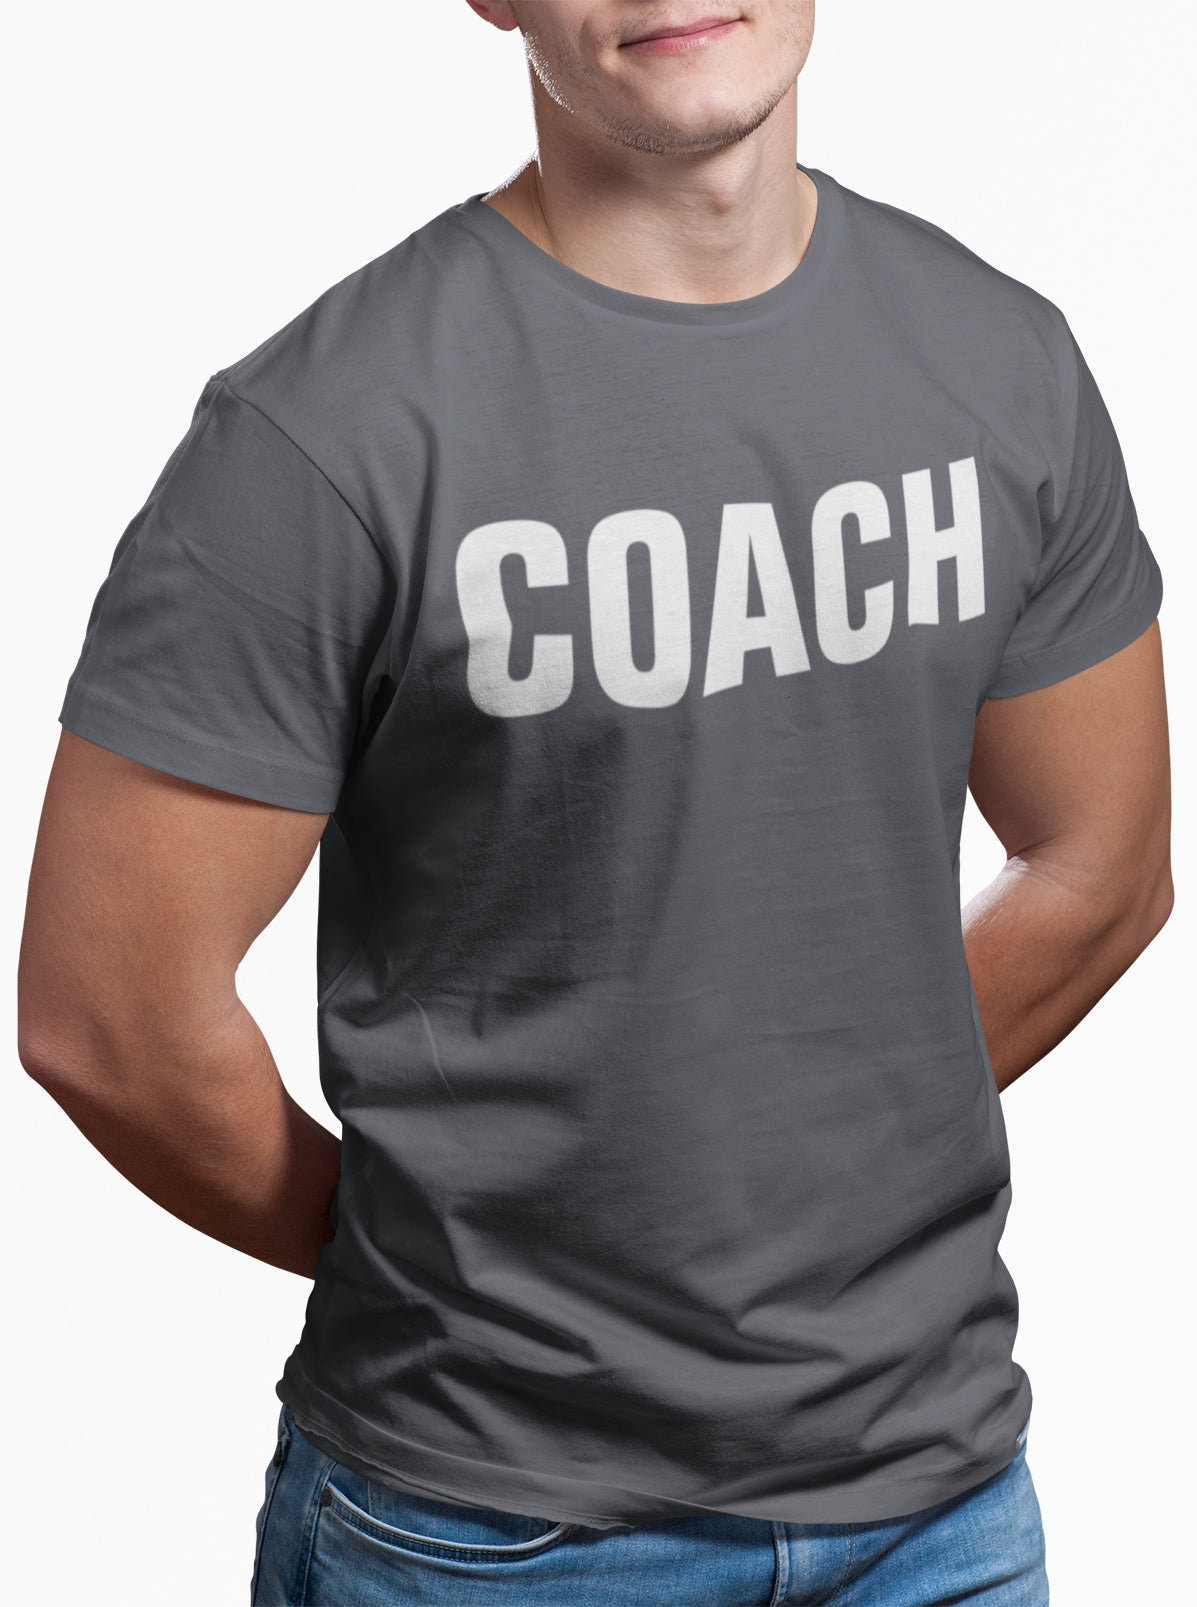 COACH Adult T-Shirt (#406-1)